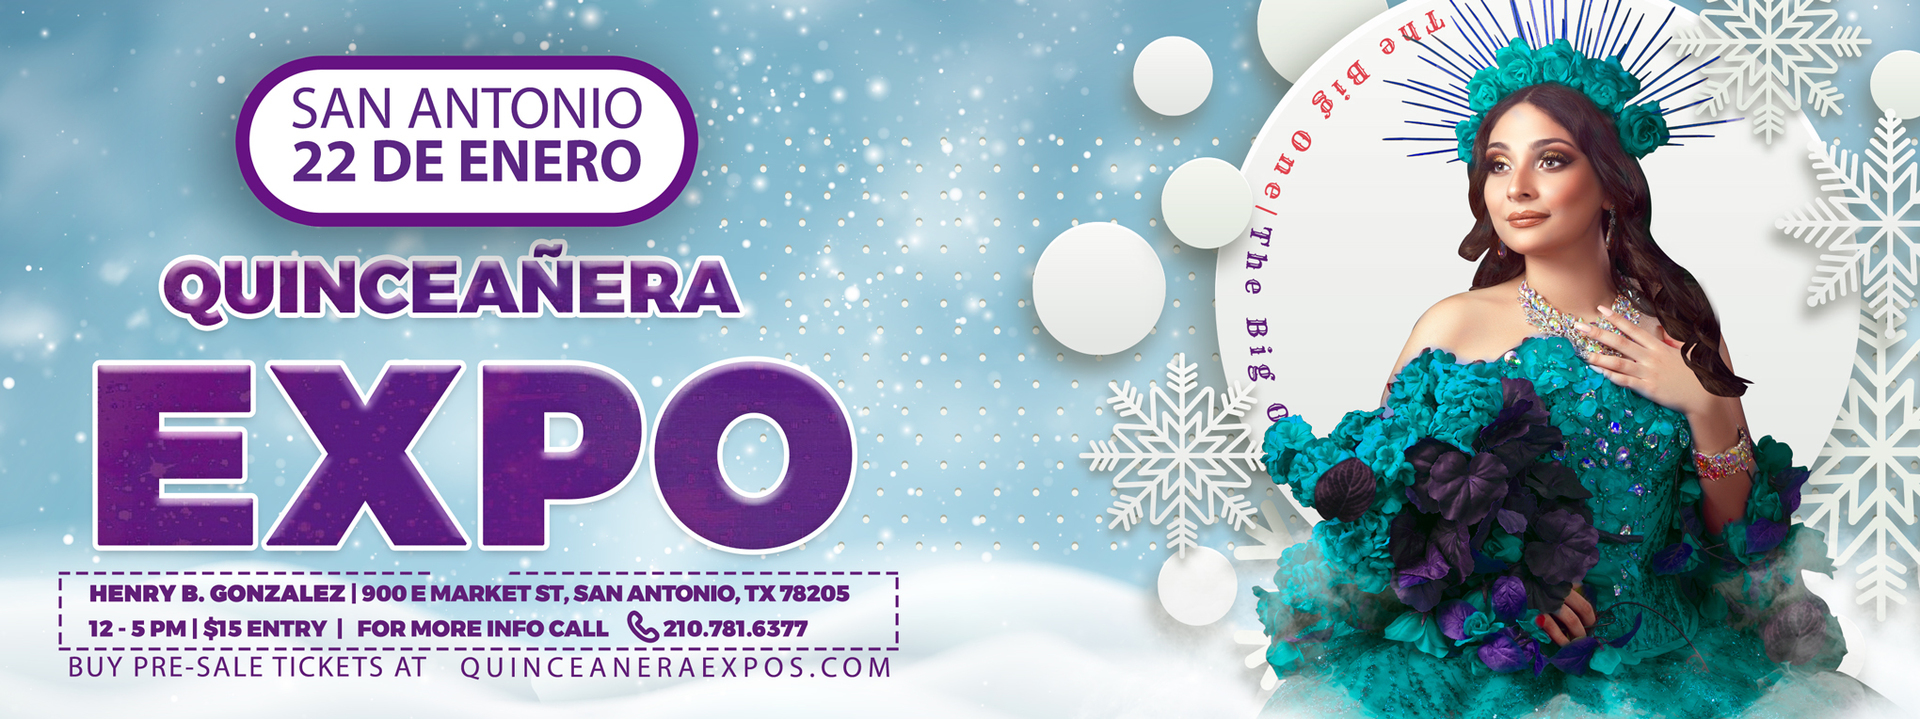 Quinceanera Expo San Antonio January 22nd 2023 At the Henry B. Gonzalez Conv, San Antonio, Texas, United States